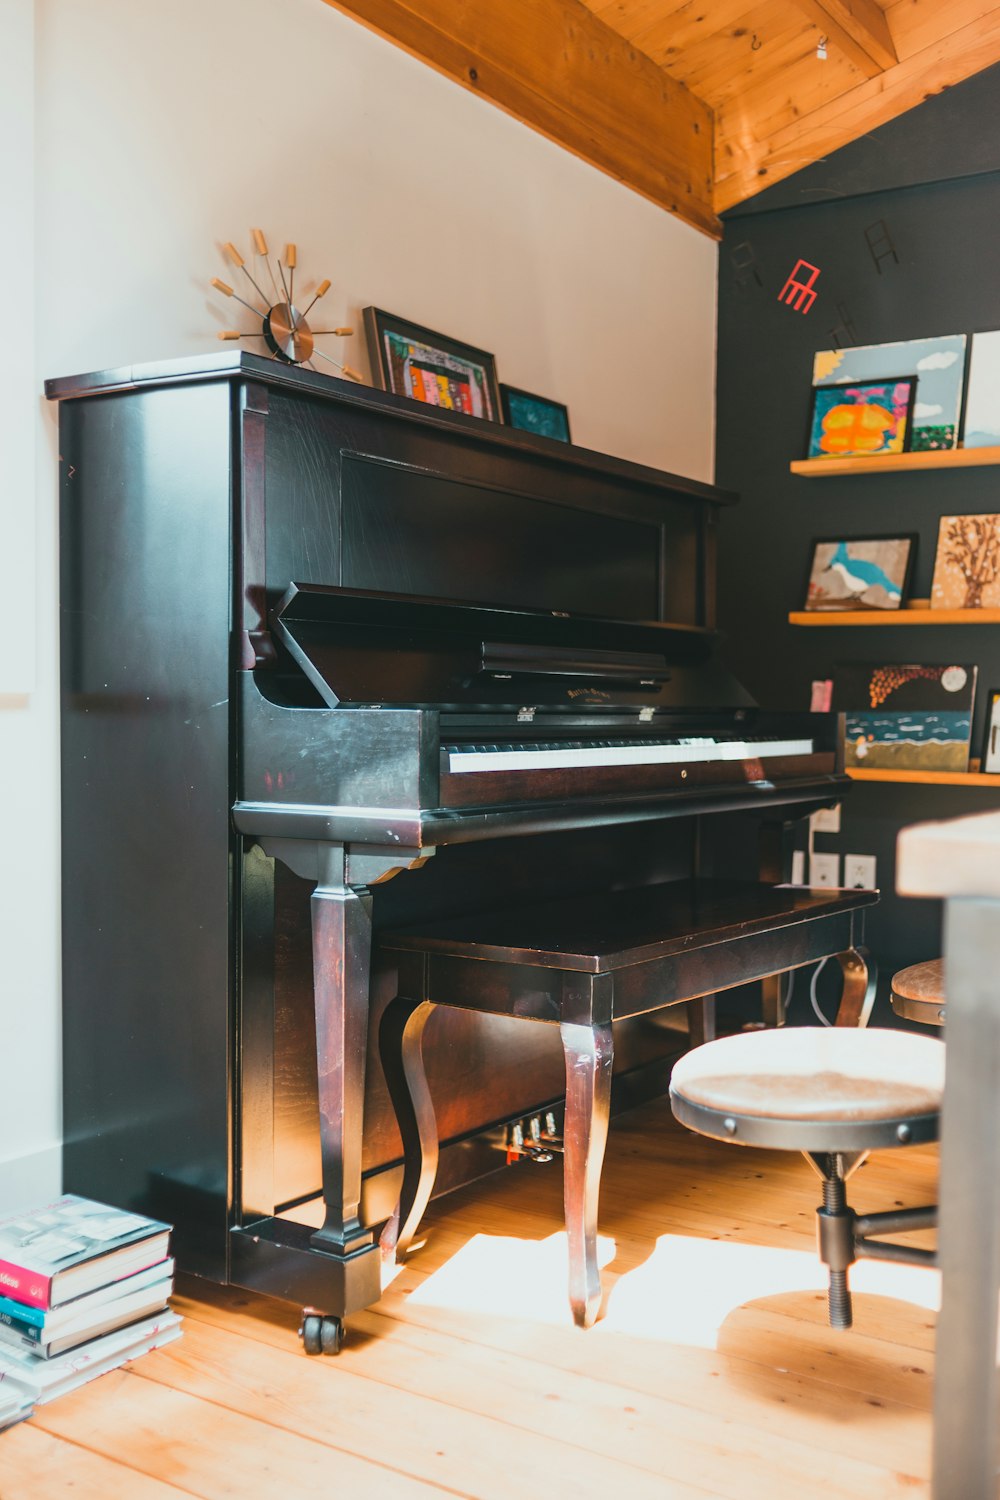 Black upright piano near brown wooden shelf photo – Free Leisure activities  Image on Unsplash